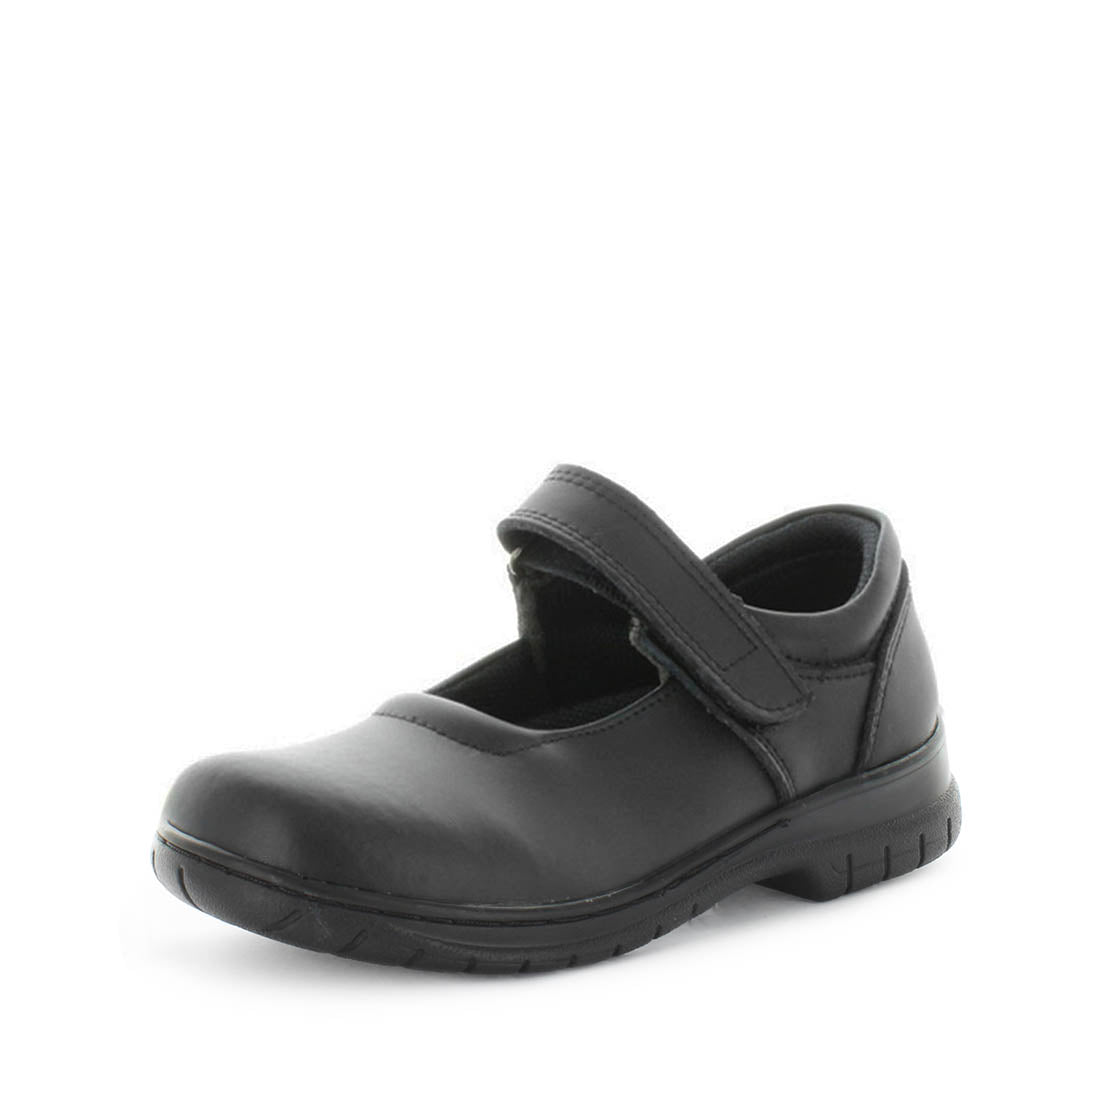 JAMESON by WILDE SCHOOL - iShoes - School Shoes, School Shoes: Junior Girl's, School Shoes: Youth - FOOTWEAR-FOOTWEAR